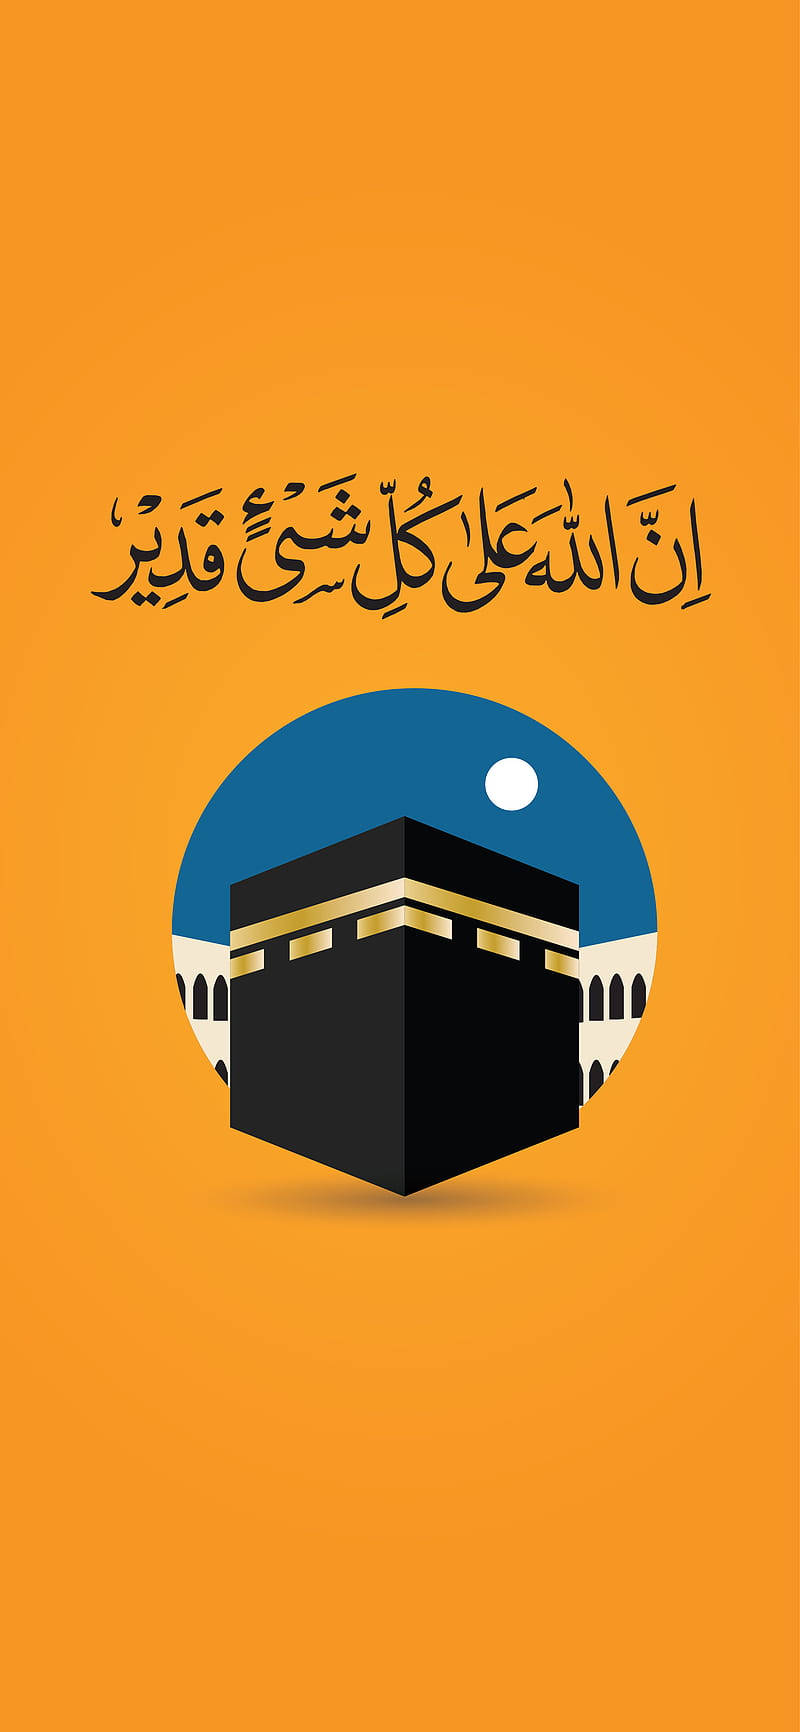 Madina's Kaaba Graphic Art Background